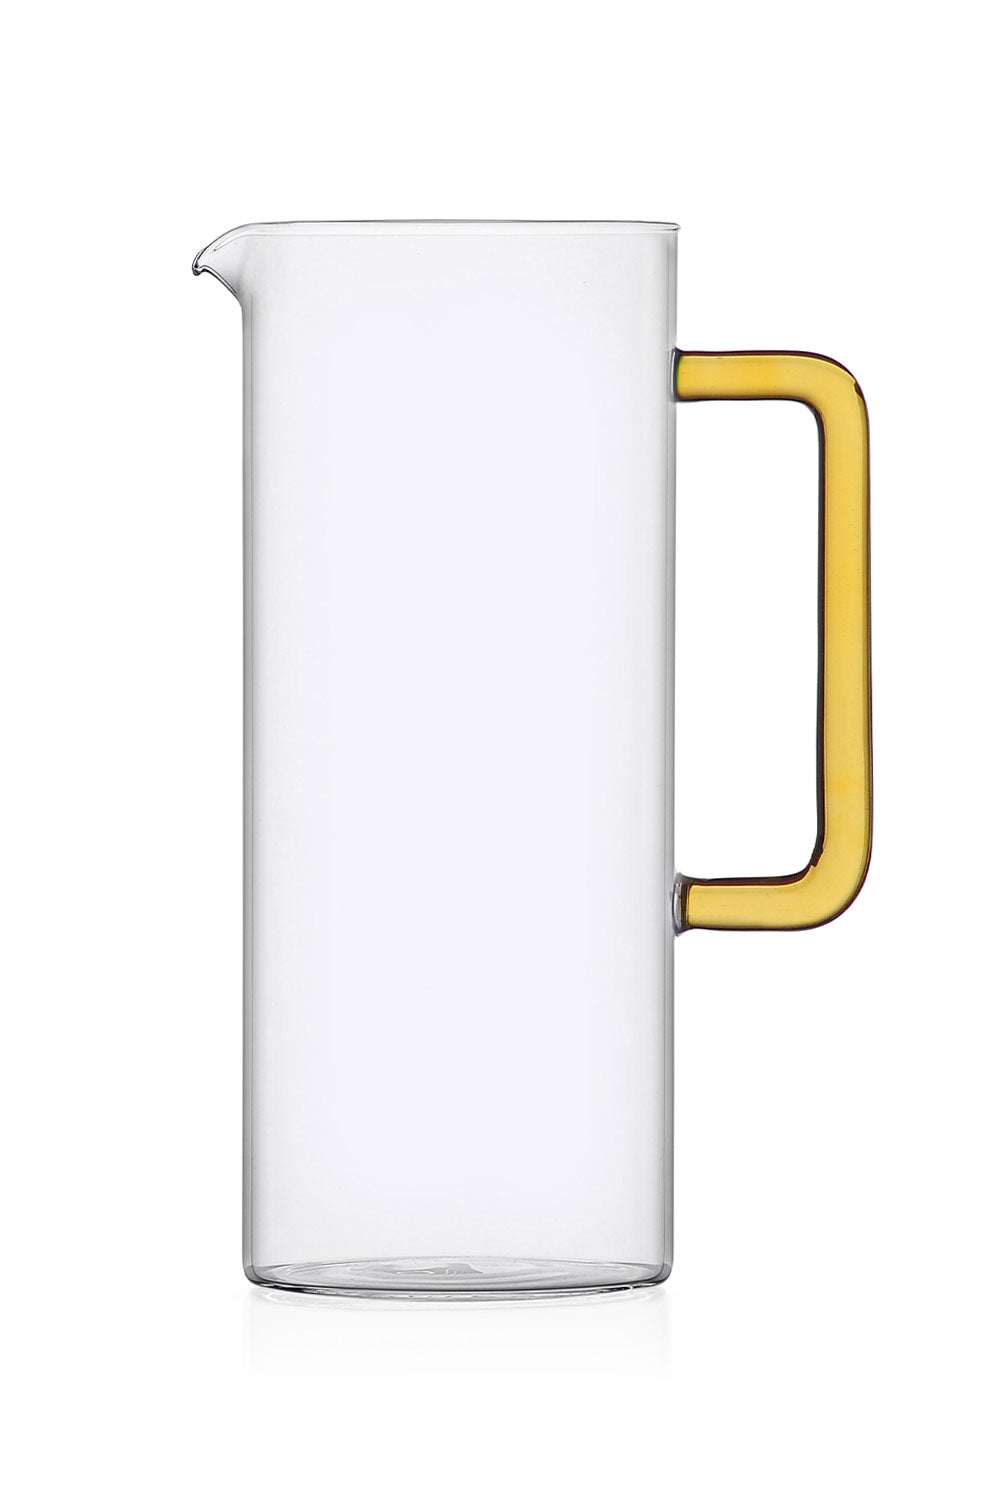 Tube Jug with Yellow Handle, 1.2L